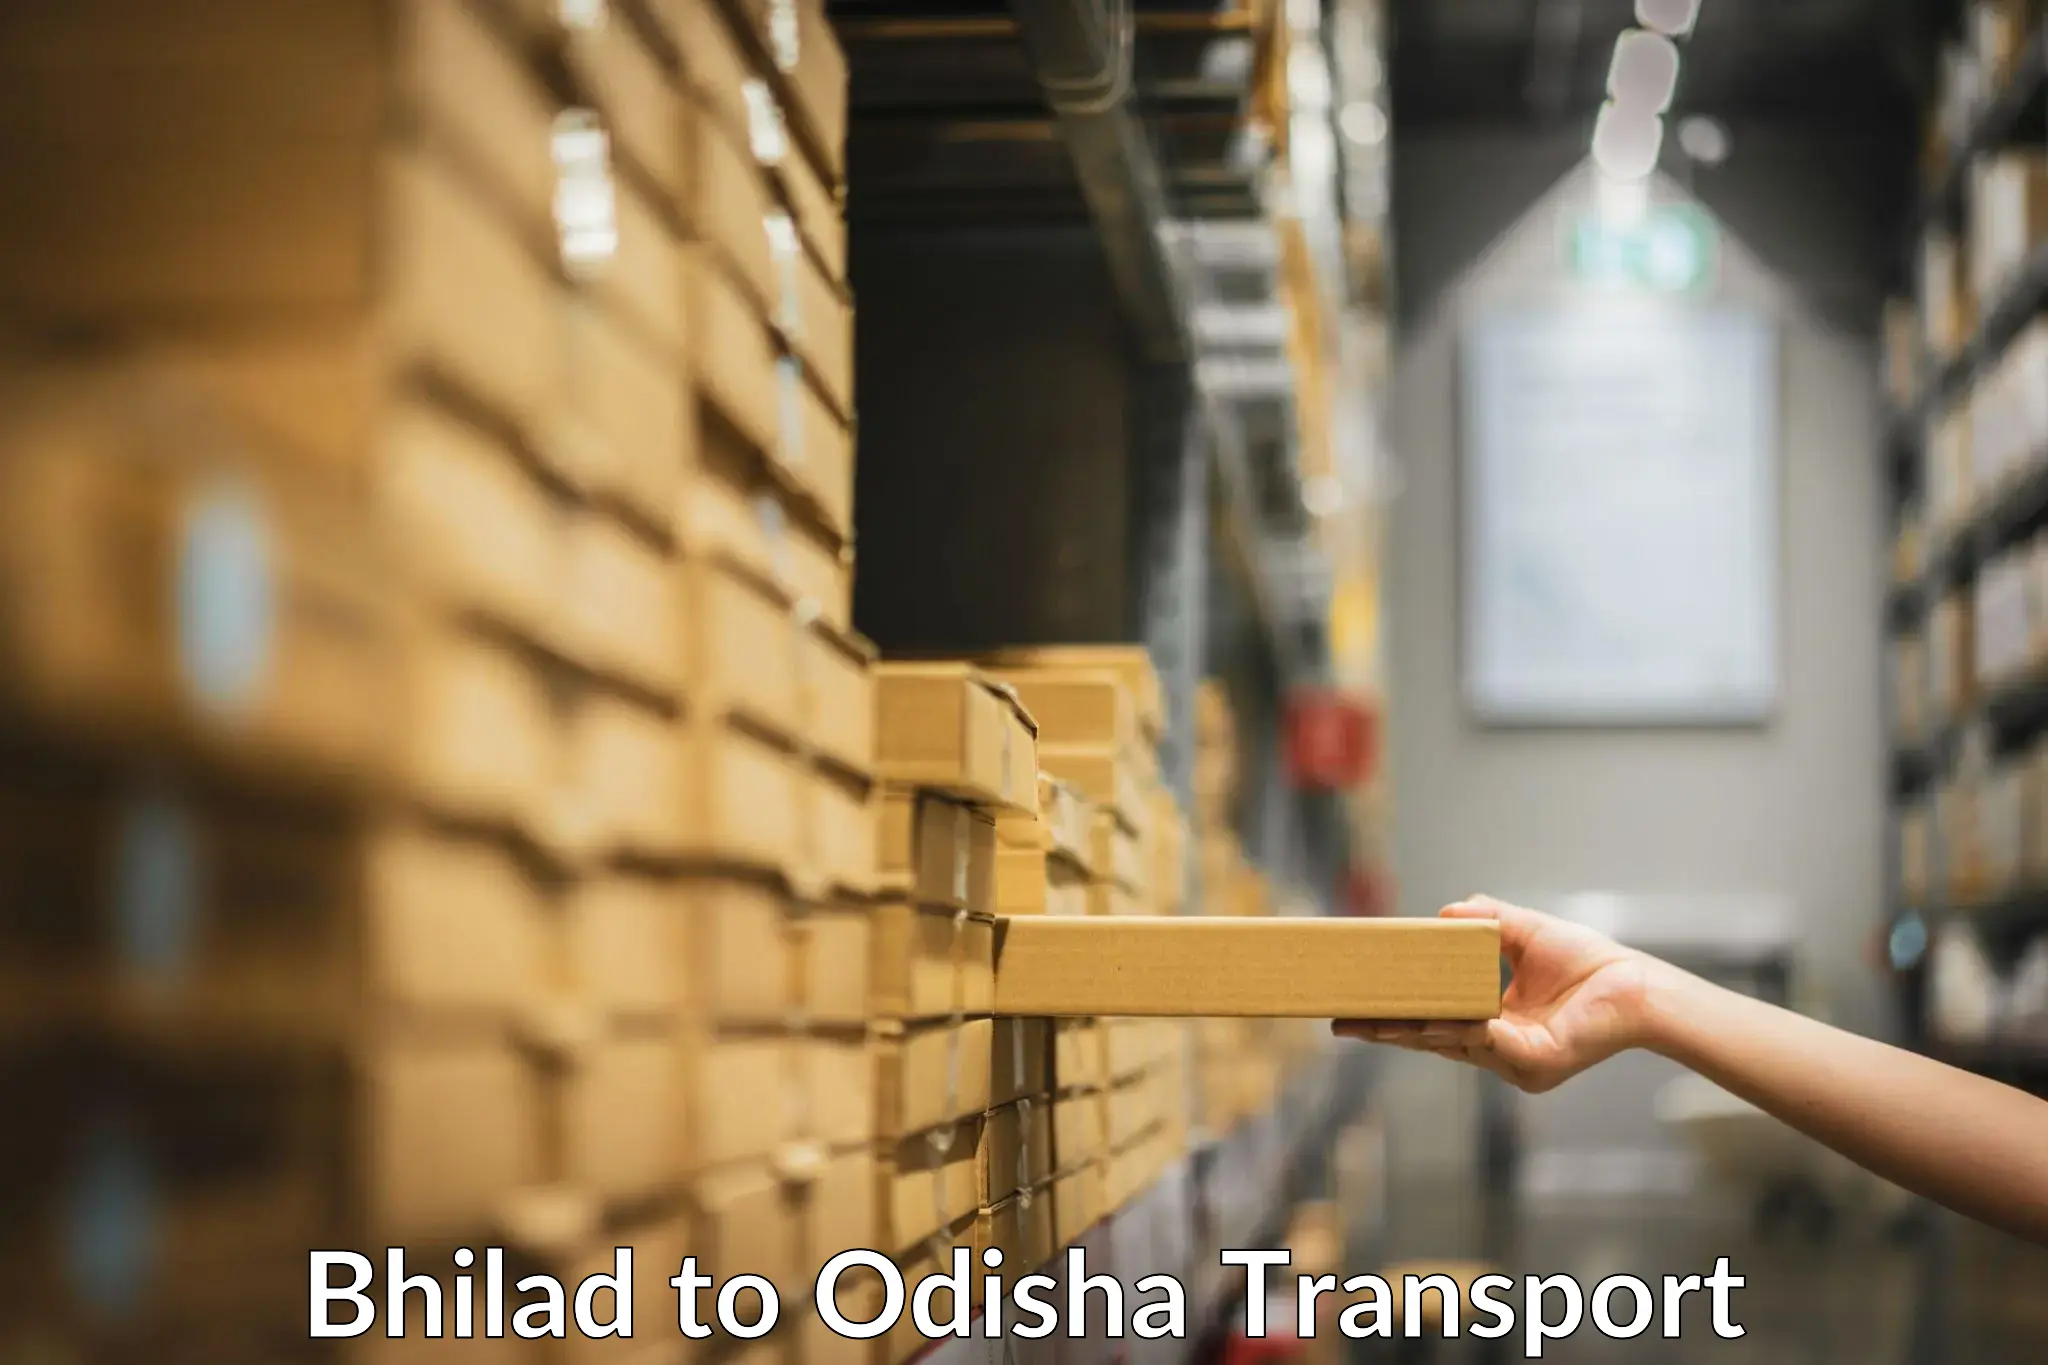 Truck transport companies in India Bhilad to Raighar